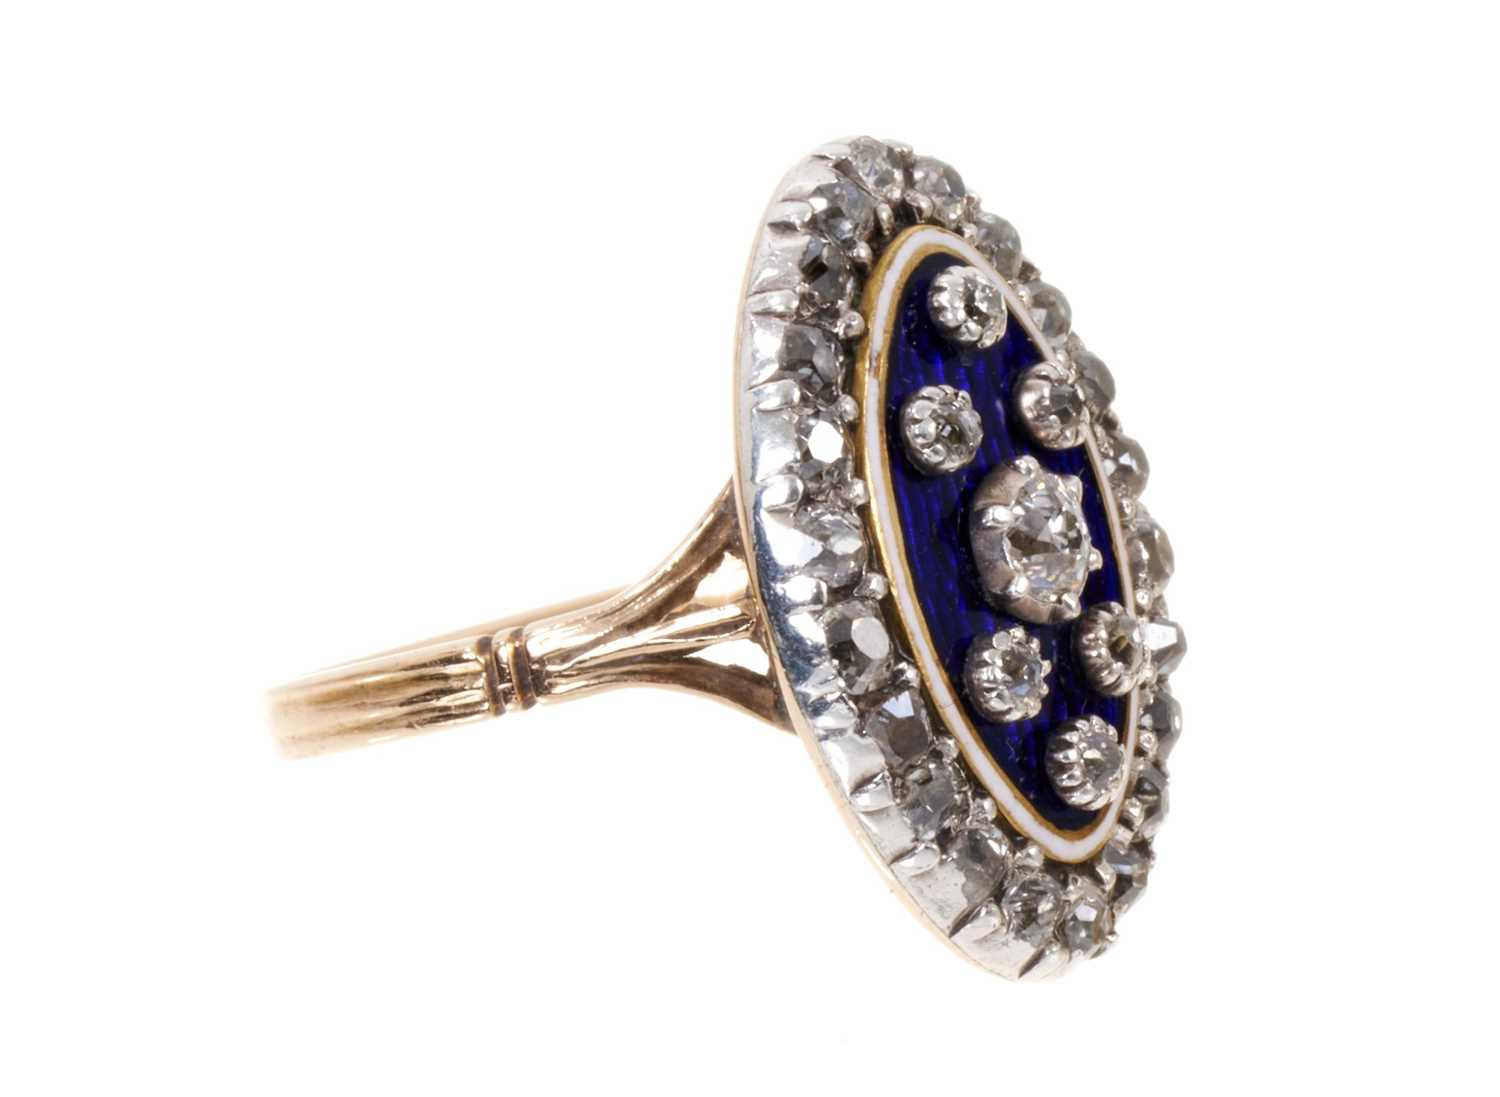 George III diamond and enamel navette form ring - Image 2 of 3